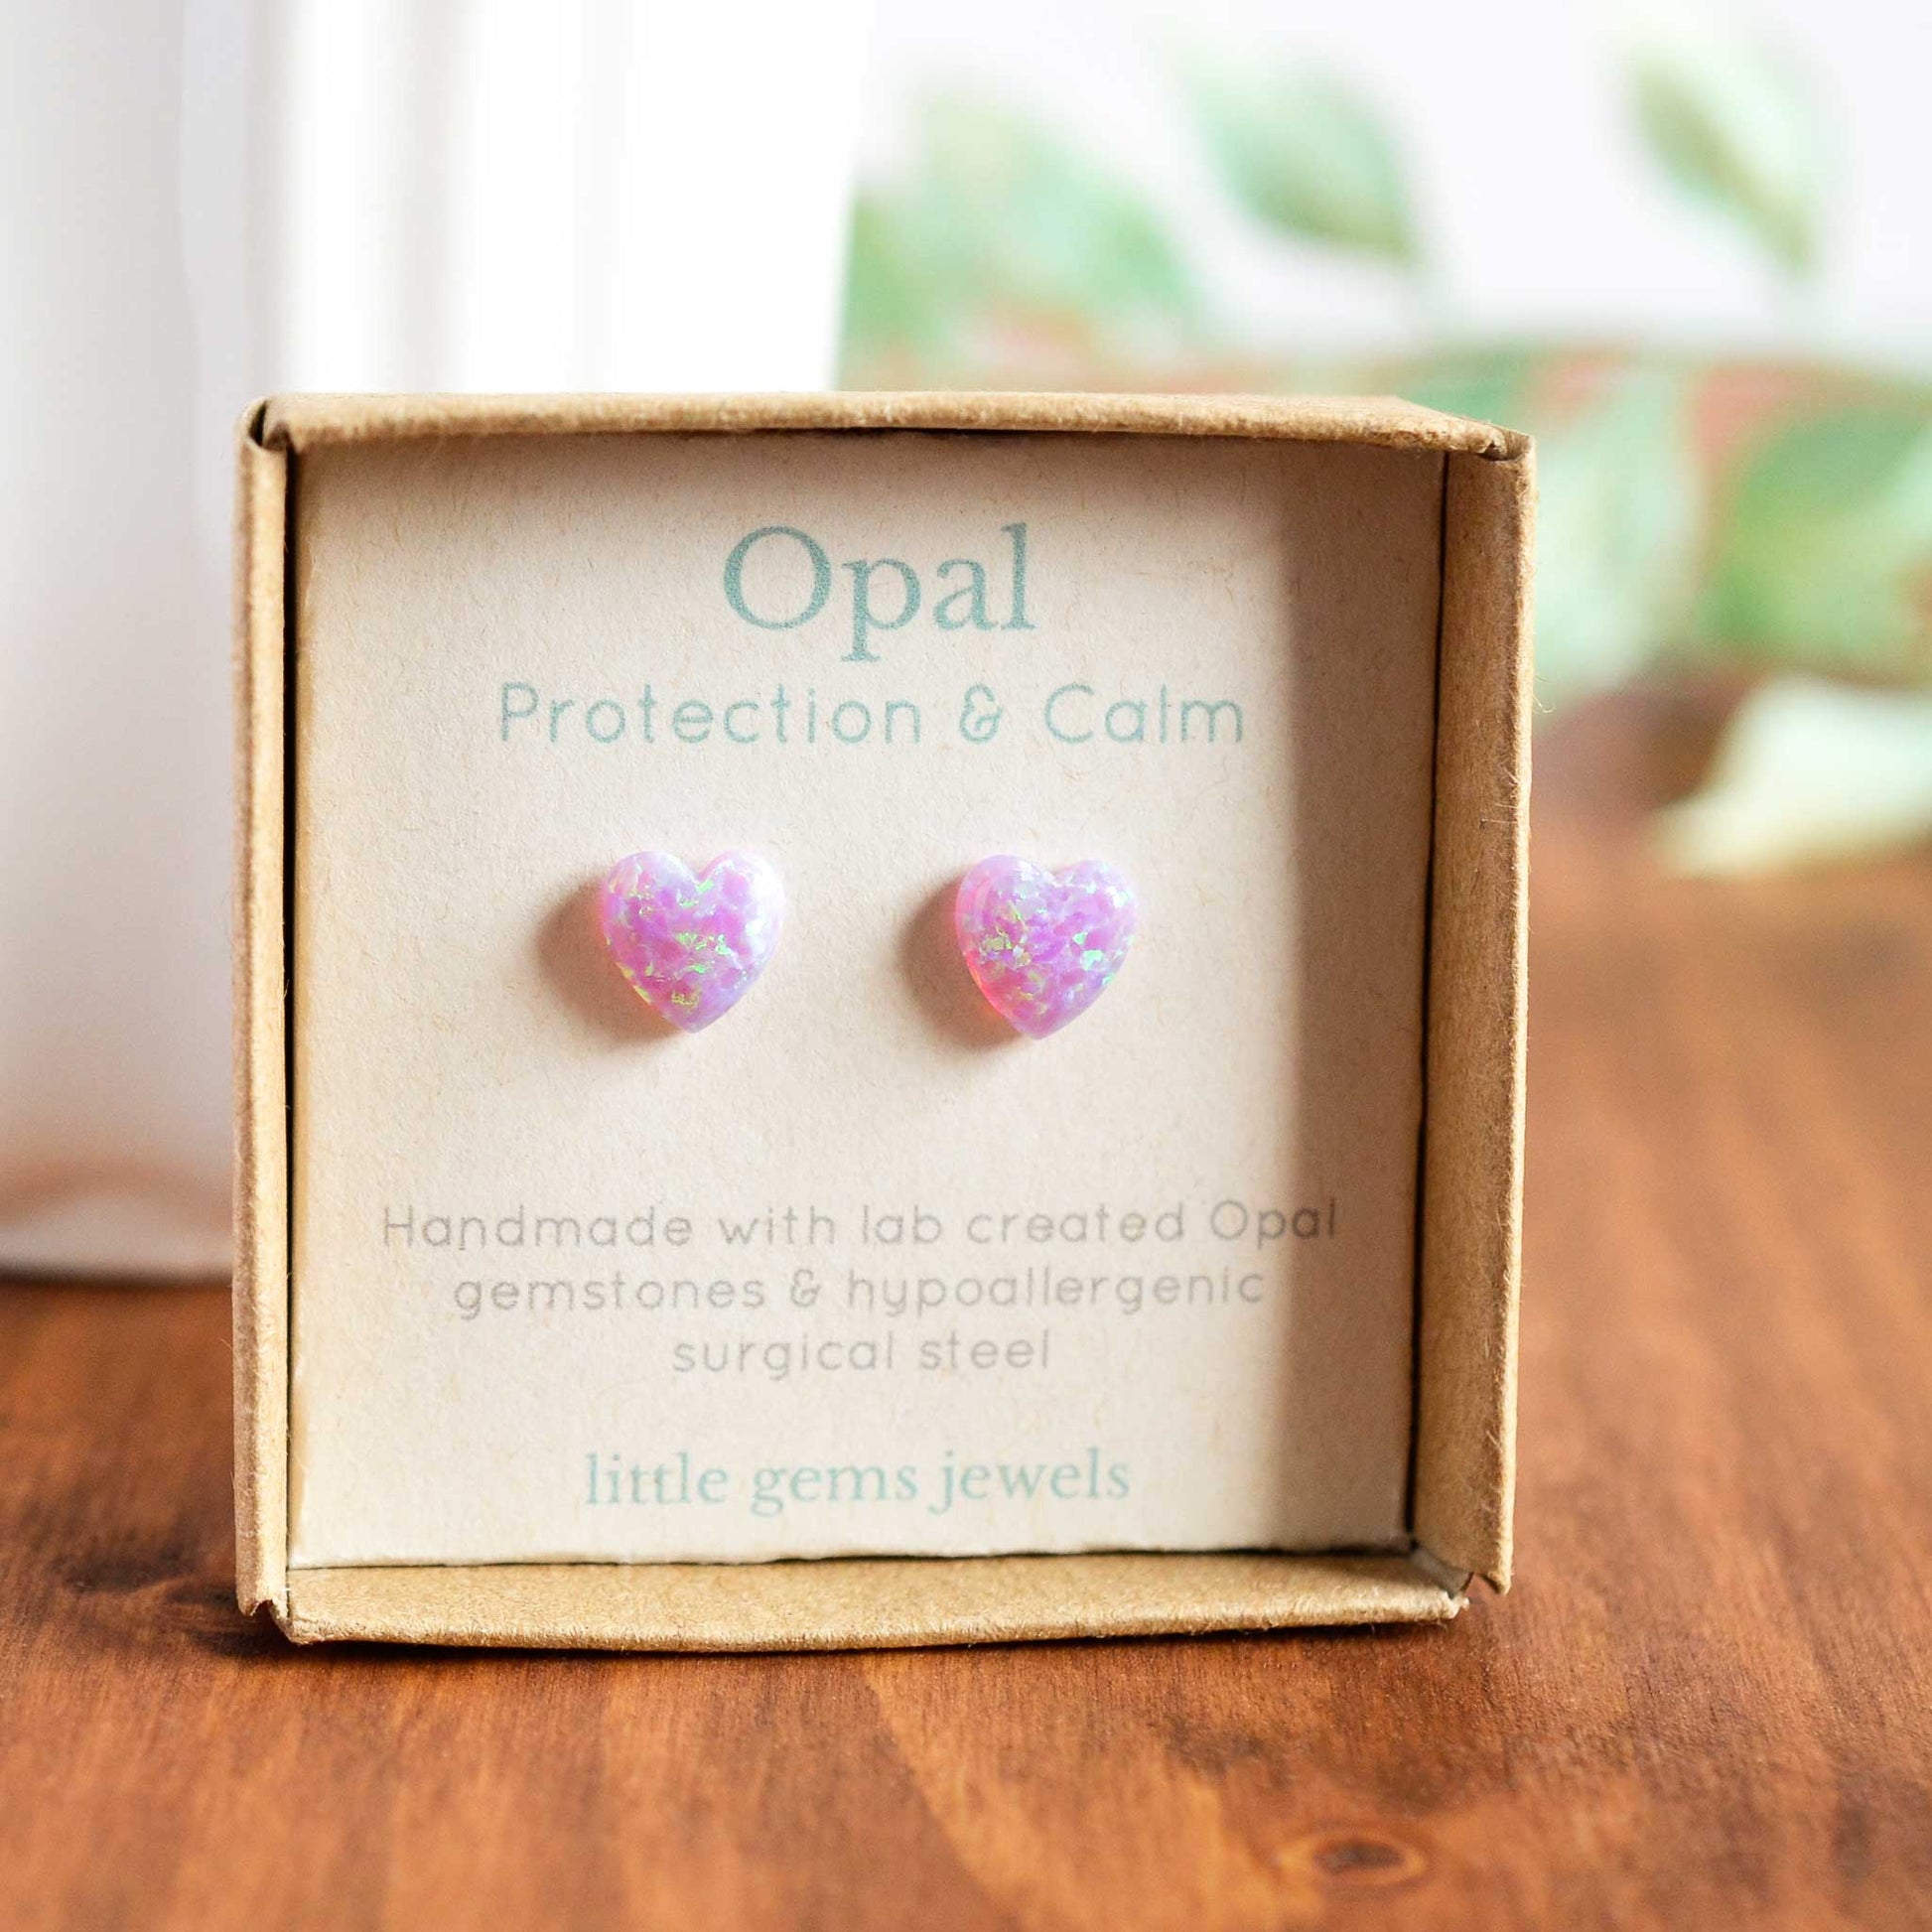 Pink lab created Opal heart stud earrings in gift box